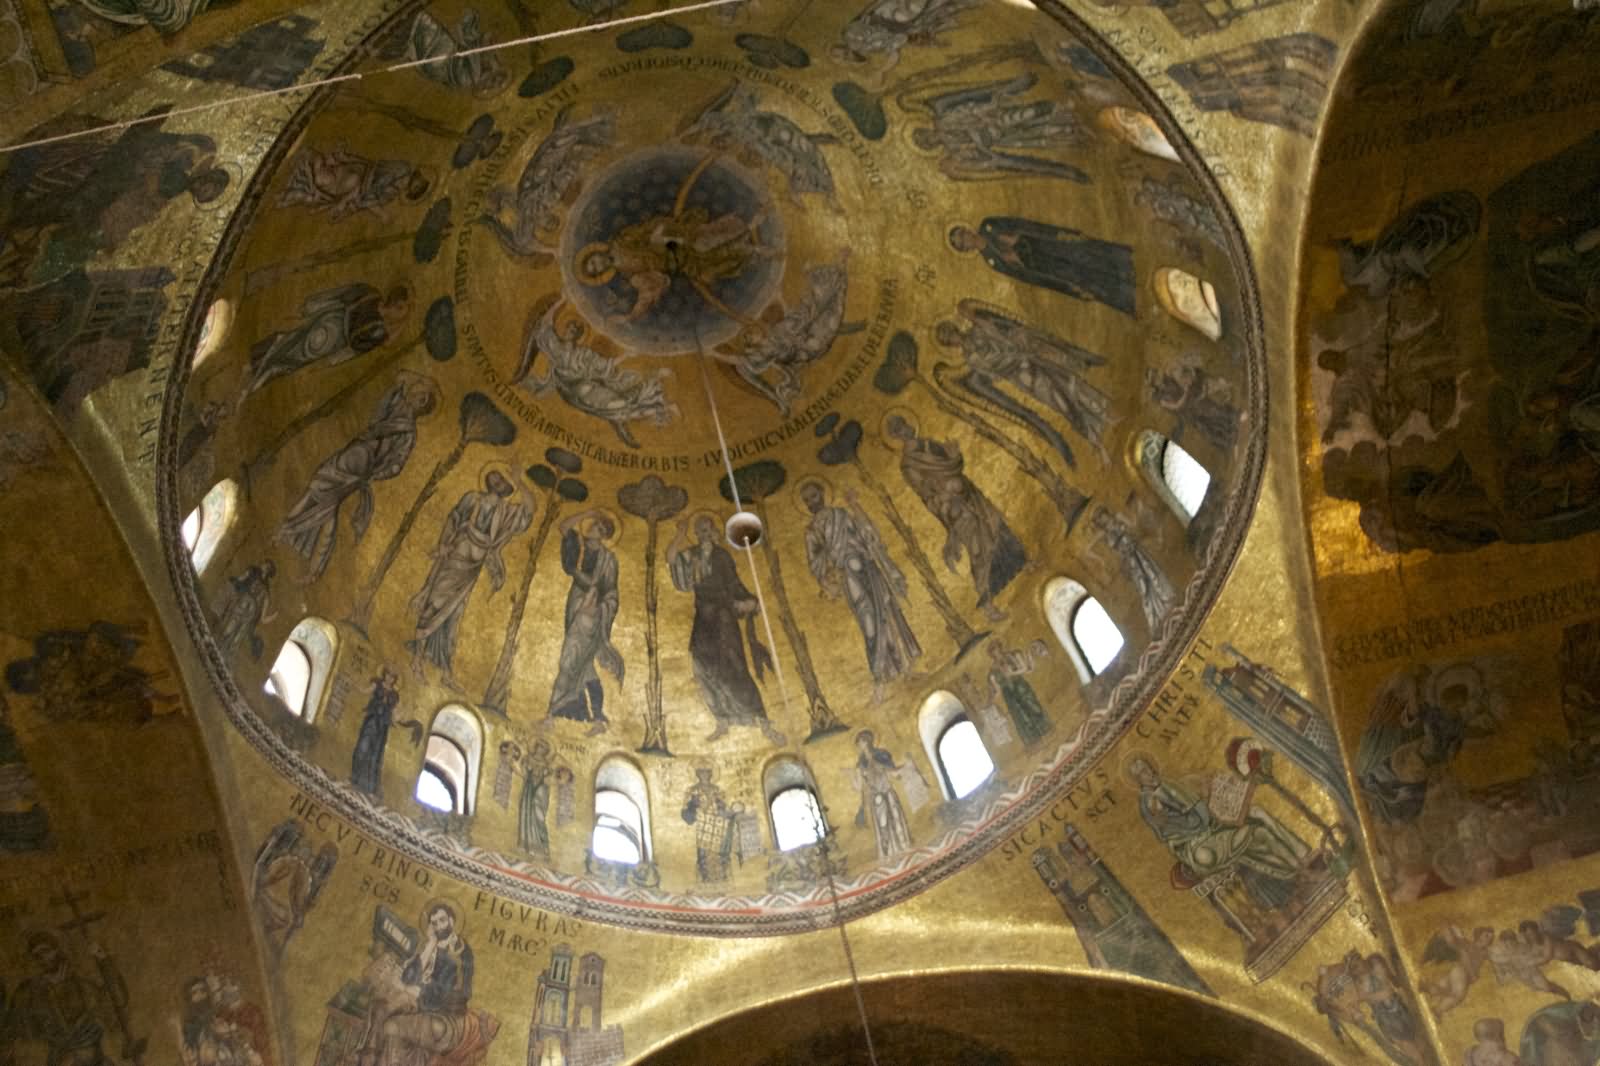 Amazing Ceiling Architecture Inside St Mark's Basilica